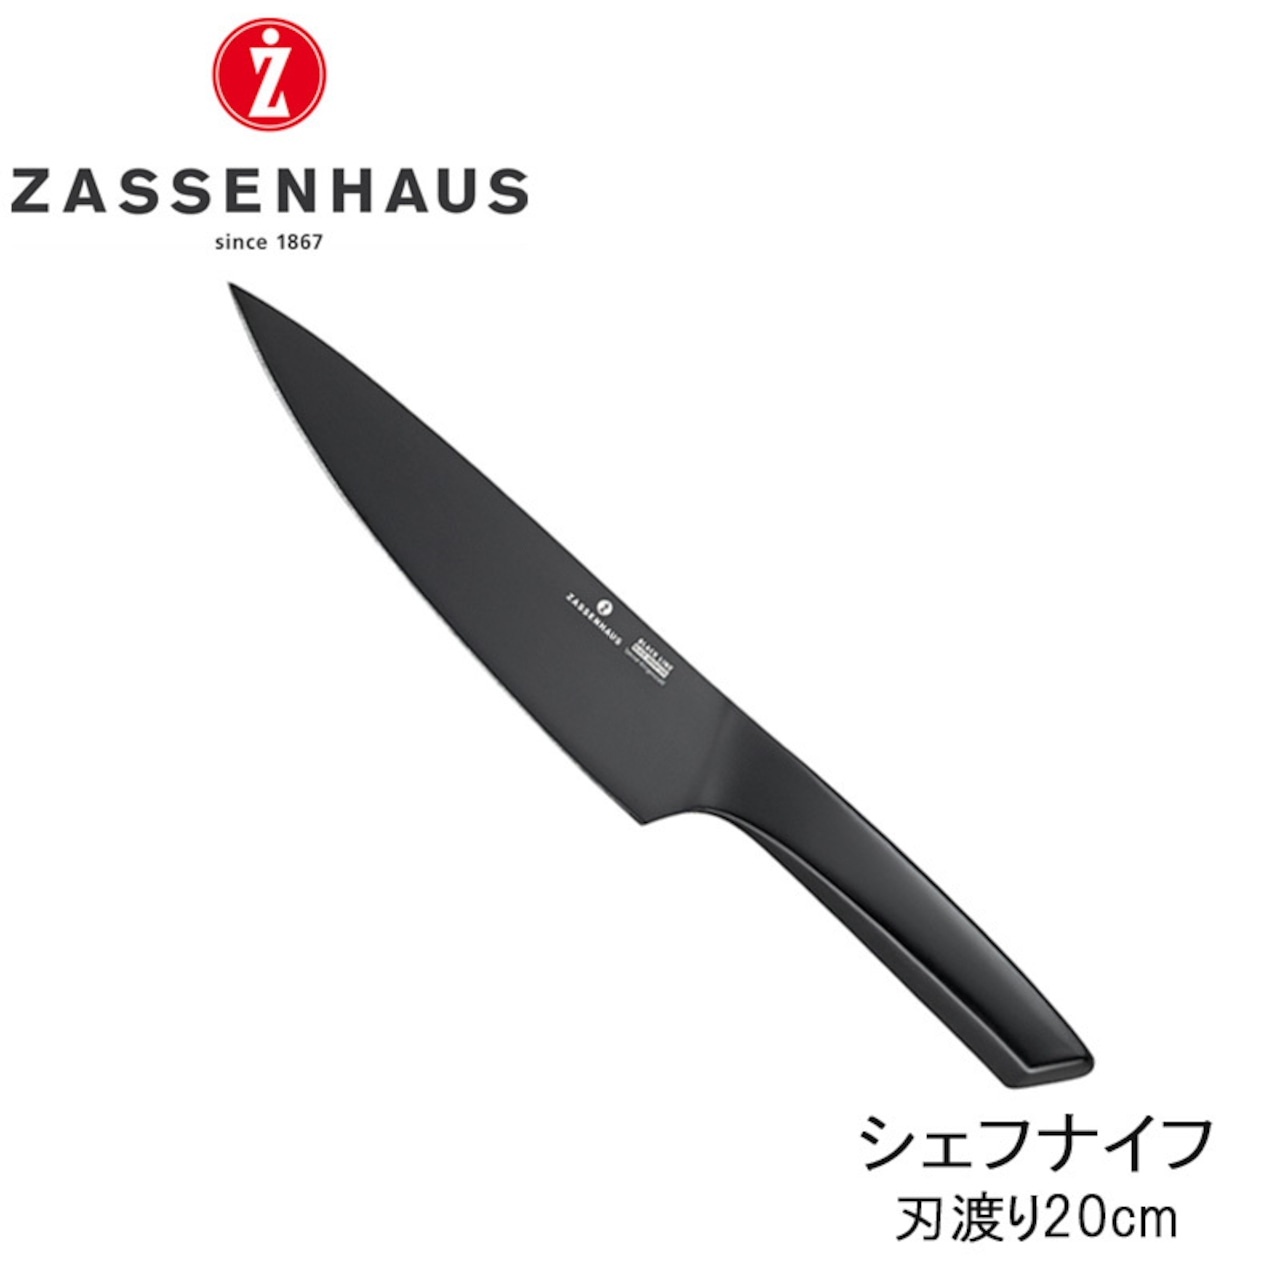 ZASSENHAUS ザッセンハウス ブラックライン シェフナイフ 20cm 包丁 キャンプ アウトドア 用品 グッズ